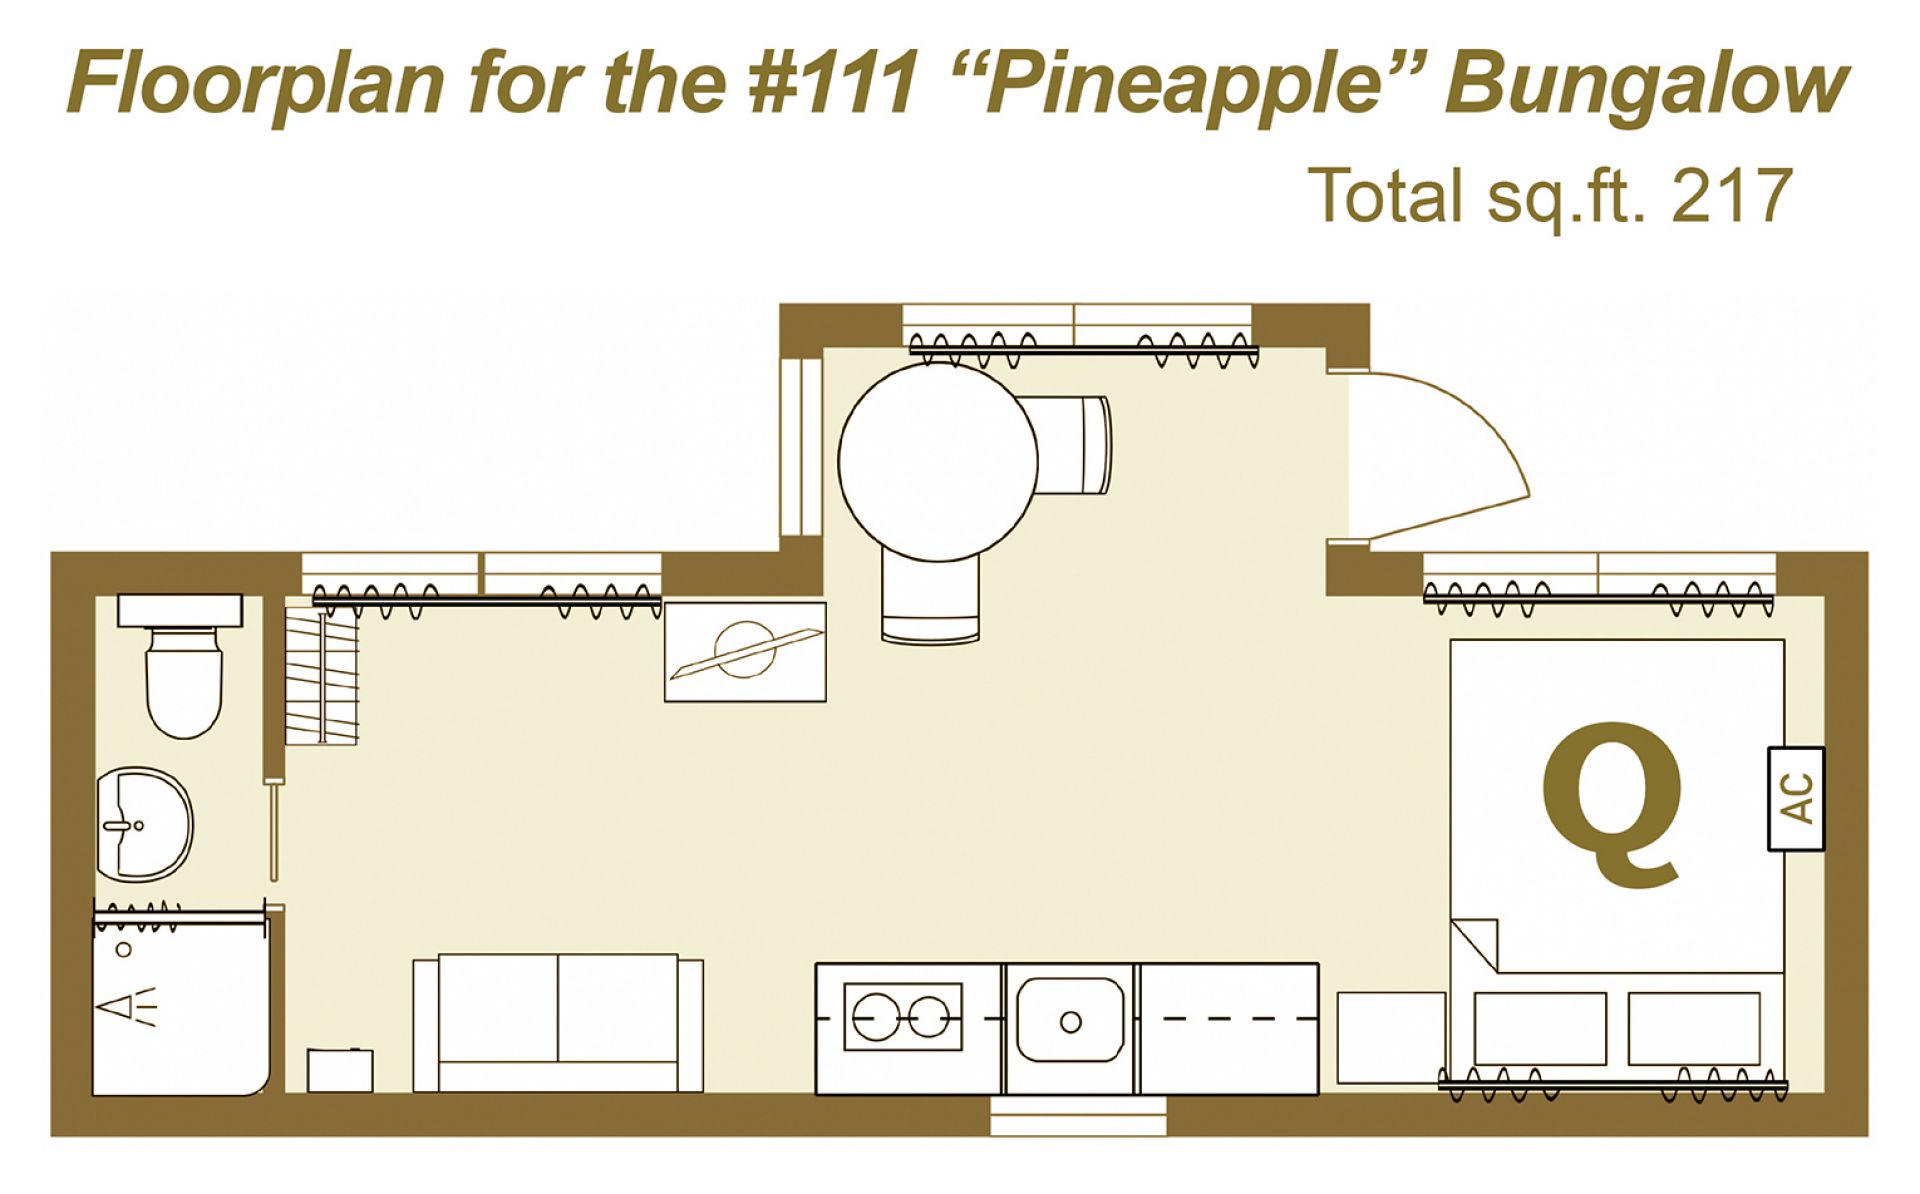 Floor plan for Pineapple Bungalow #111 Bungalow